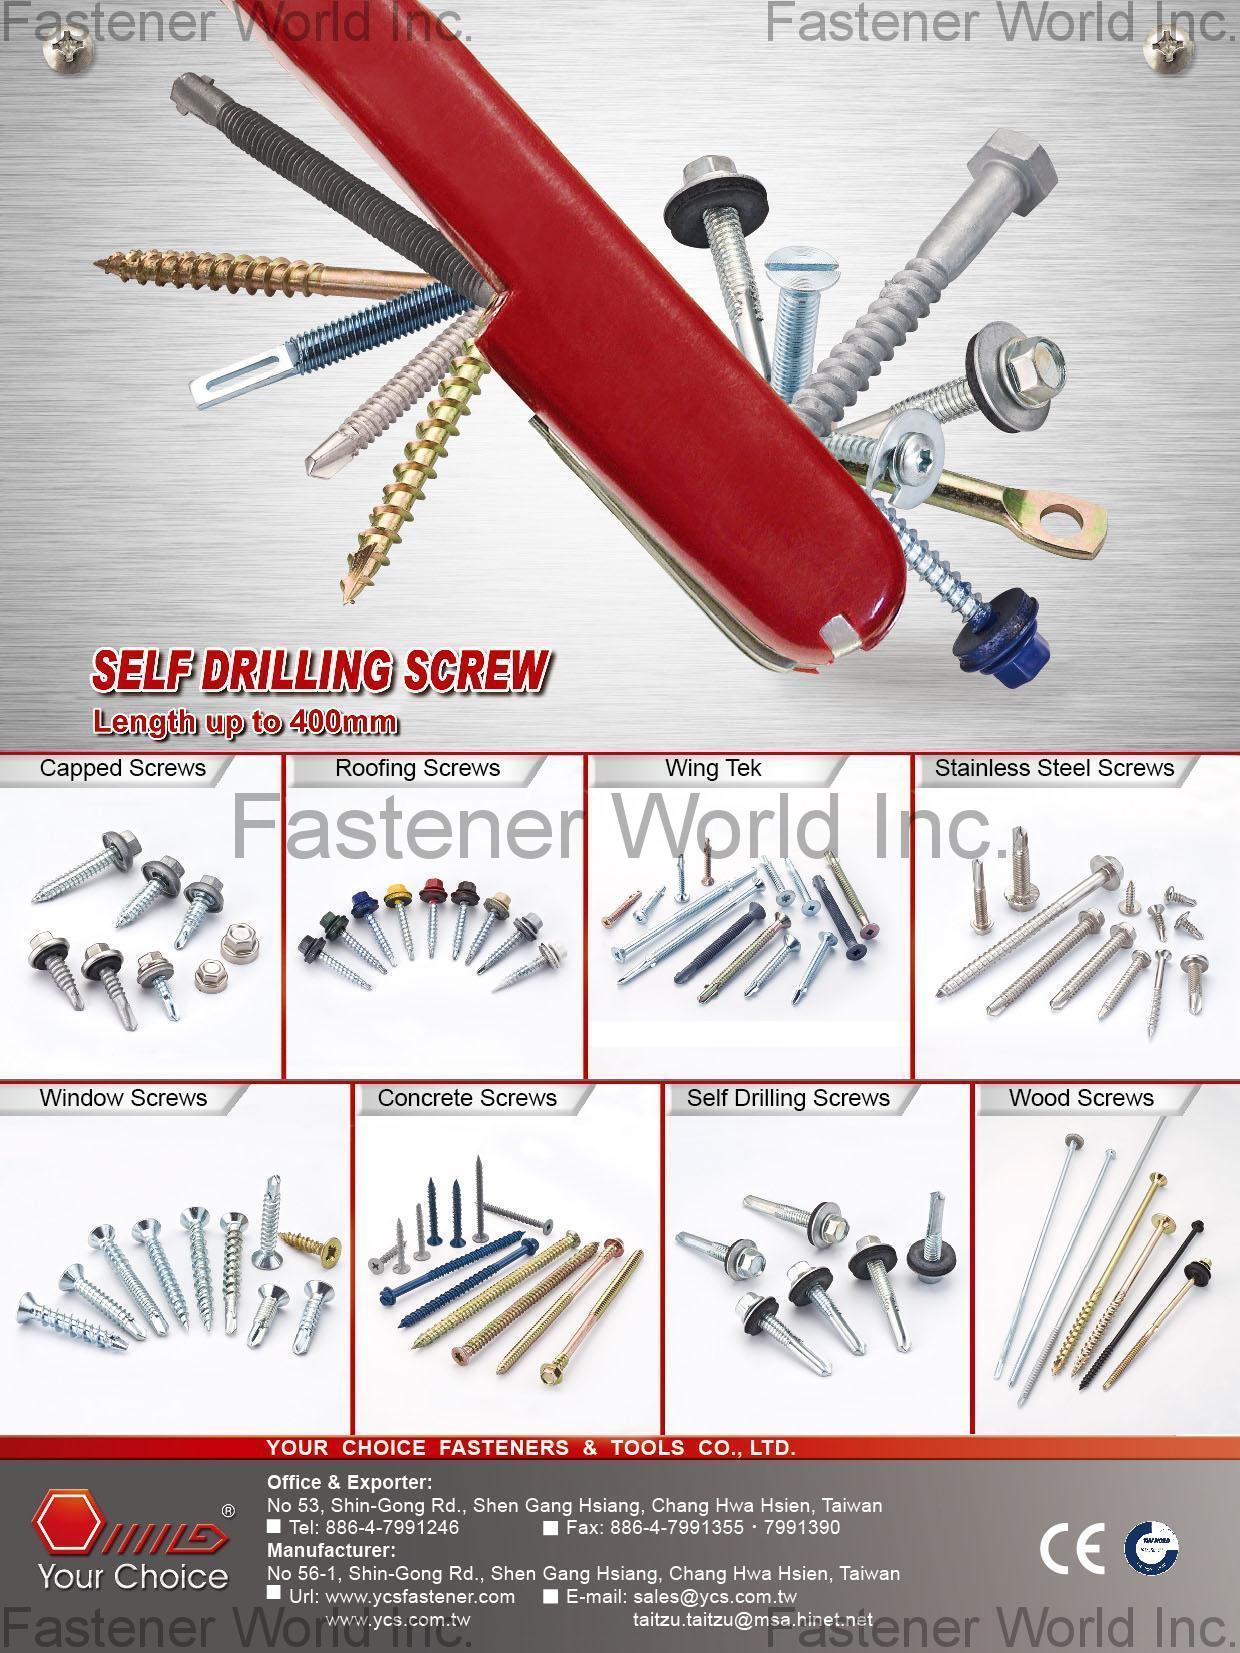 YOUR CHOICE FASTENERS & TOOLS CO., LTD.  , Self Drilling Screw,Capped Screws,Roofing Screws,Wing Tek,Stainless Steel Screws,Windows Screws,Concrete Screws,Wood Screws , Self-drilling Screws